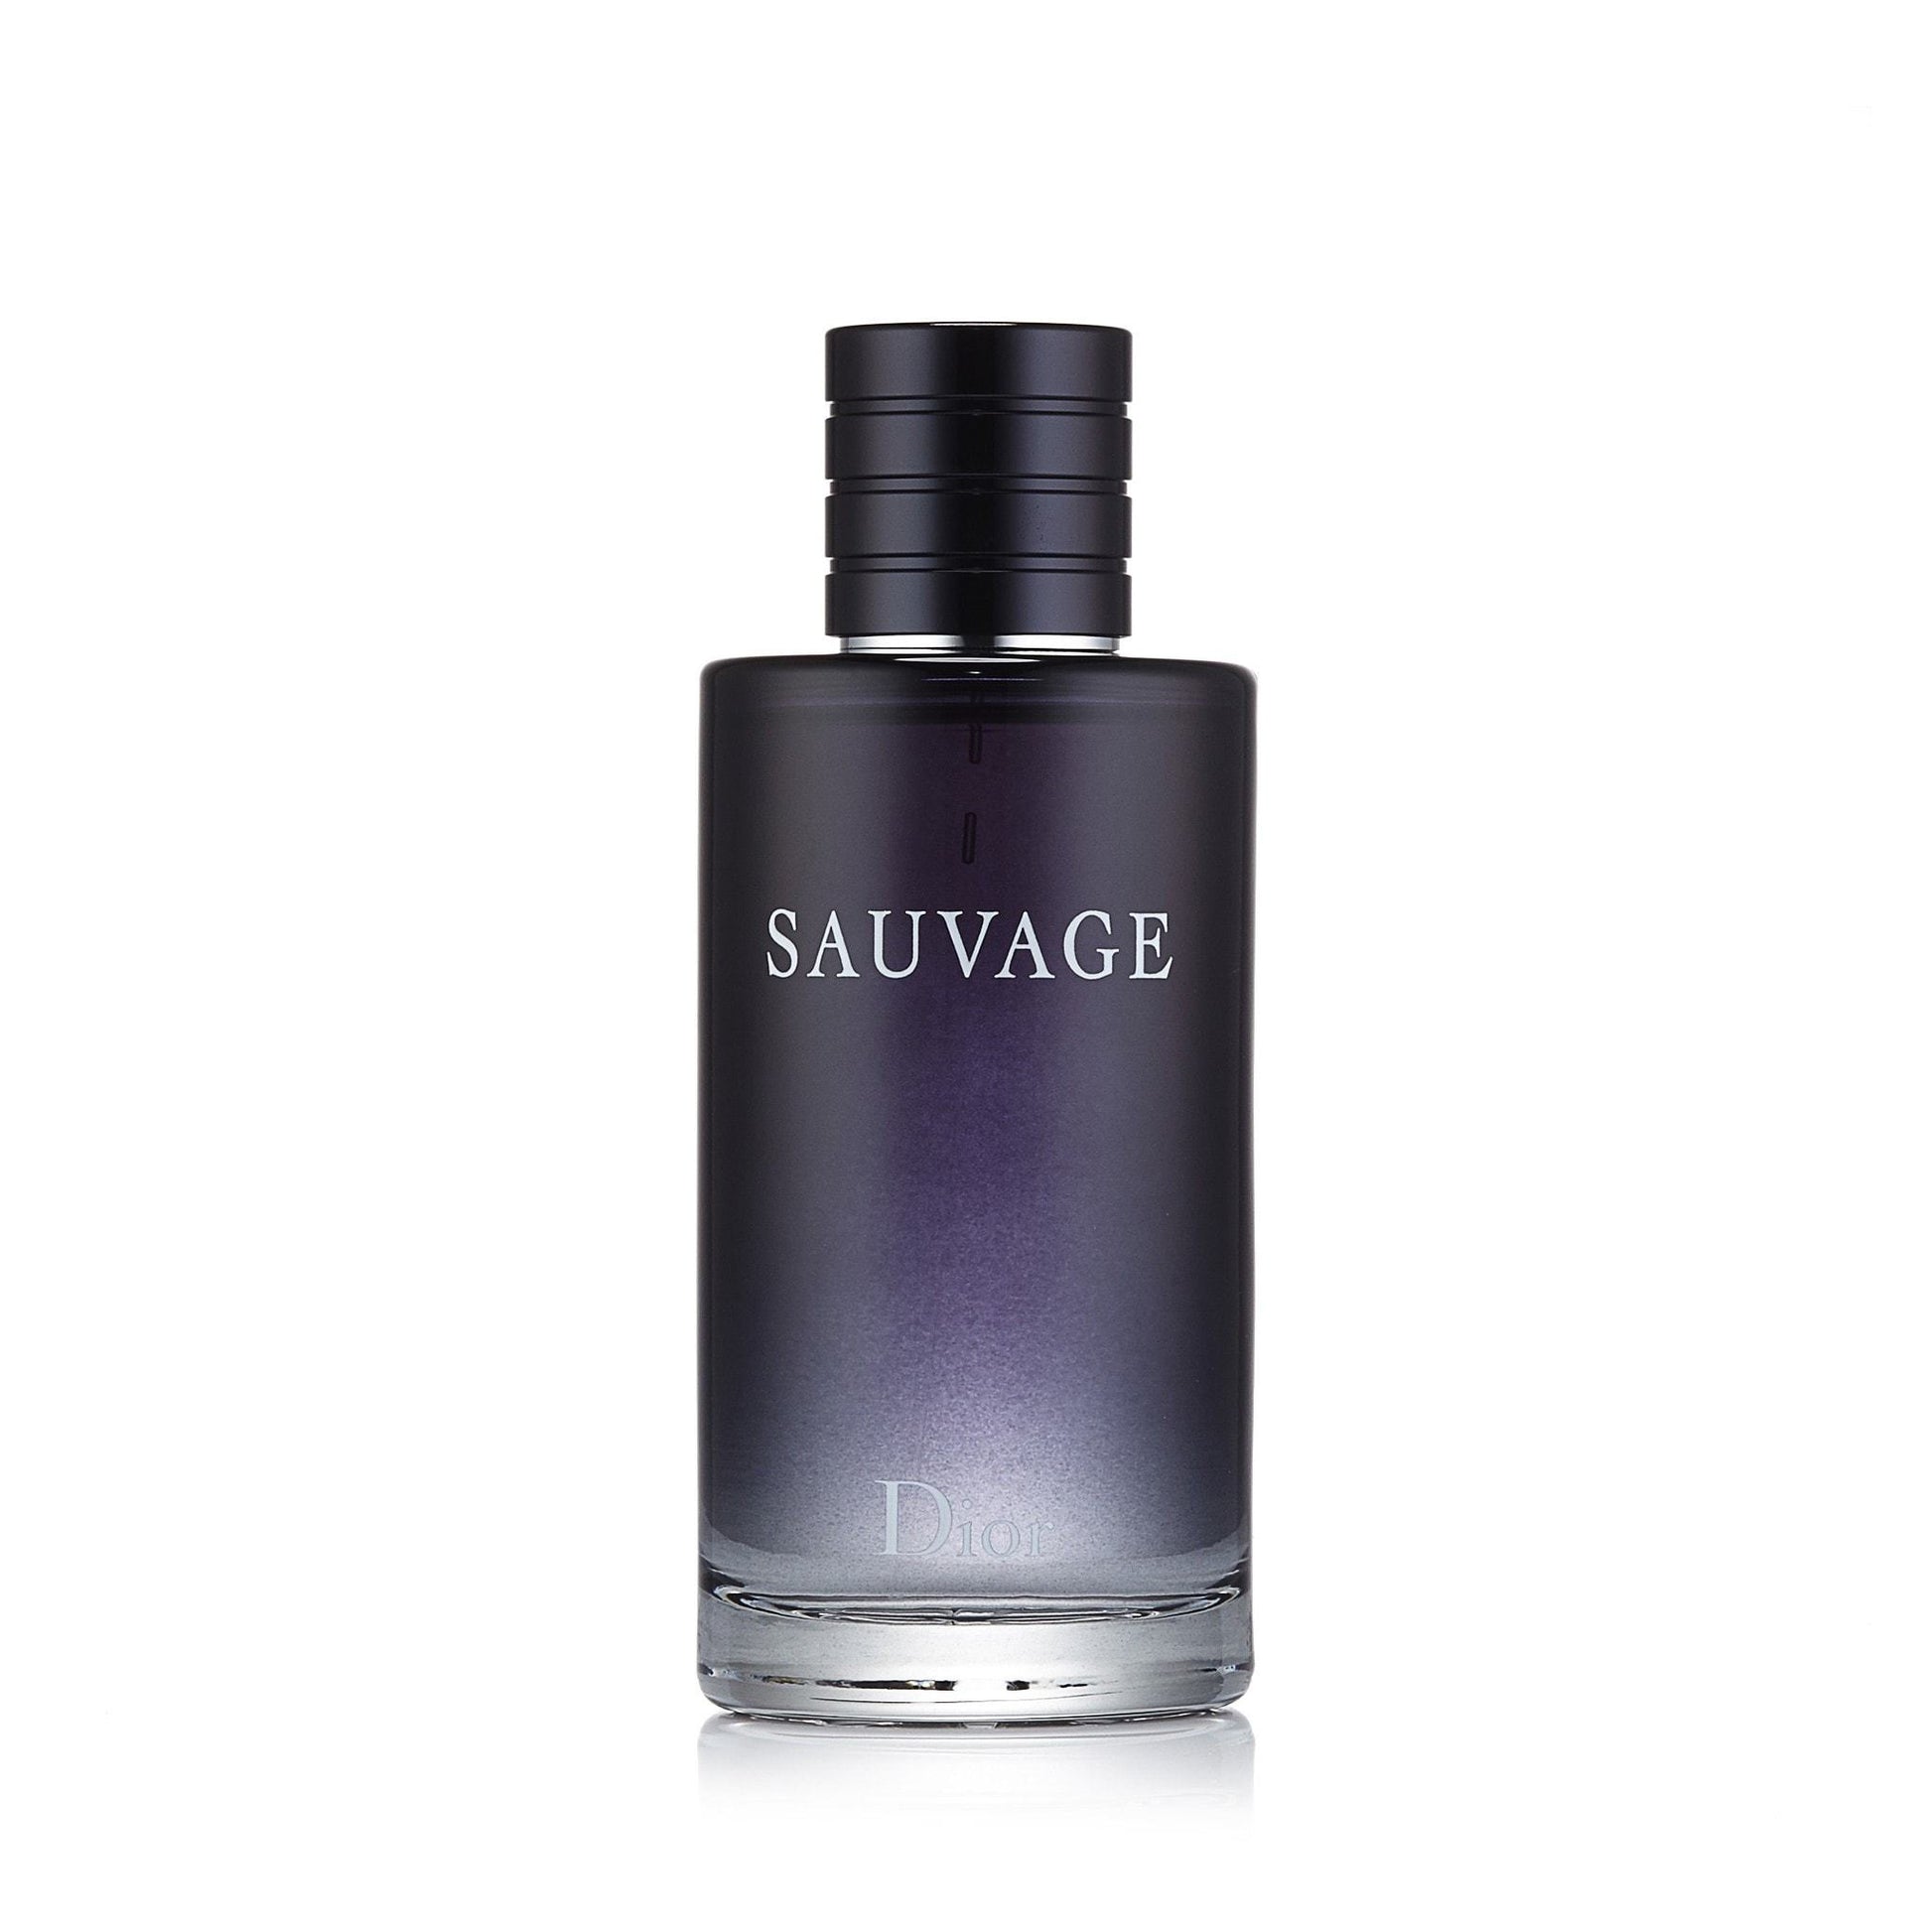 Sauvage Eau de Toilette Spray for Men by Dior, Product image 2